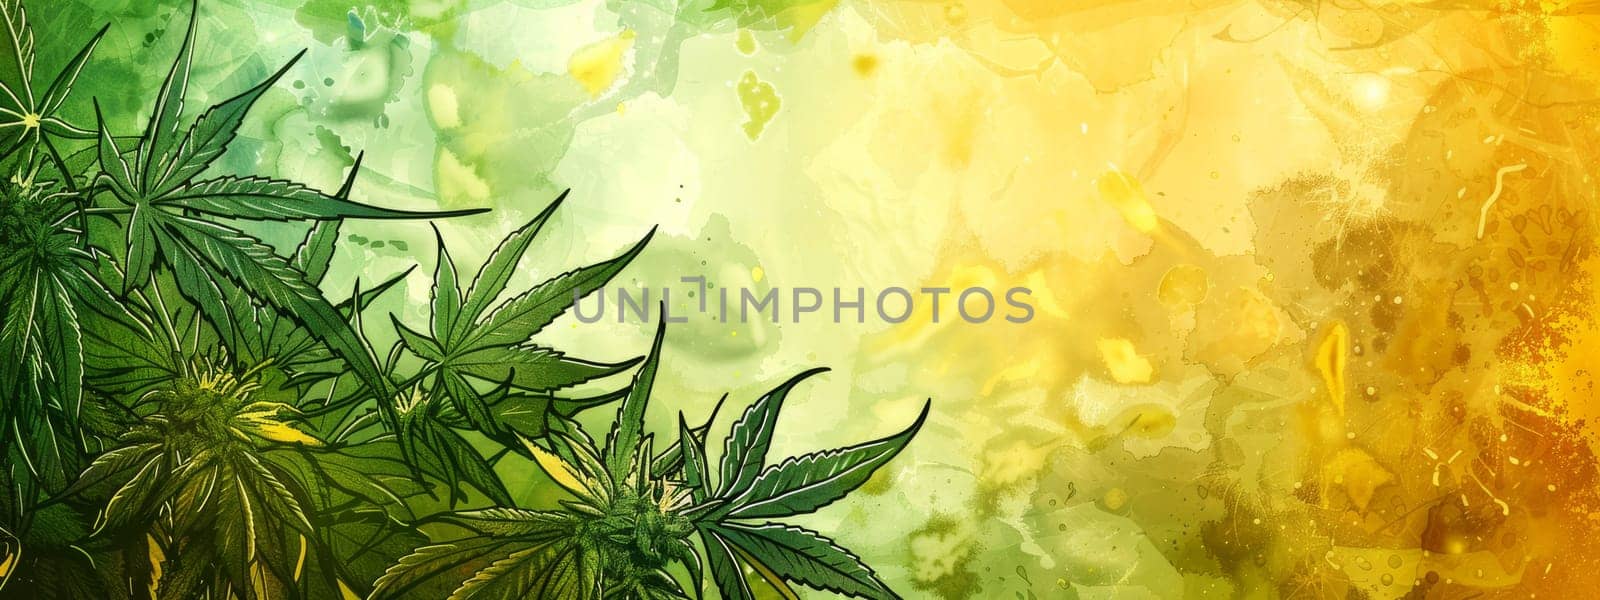 Cartoon marijuana isolated on bright green and gold background